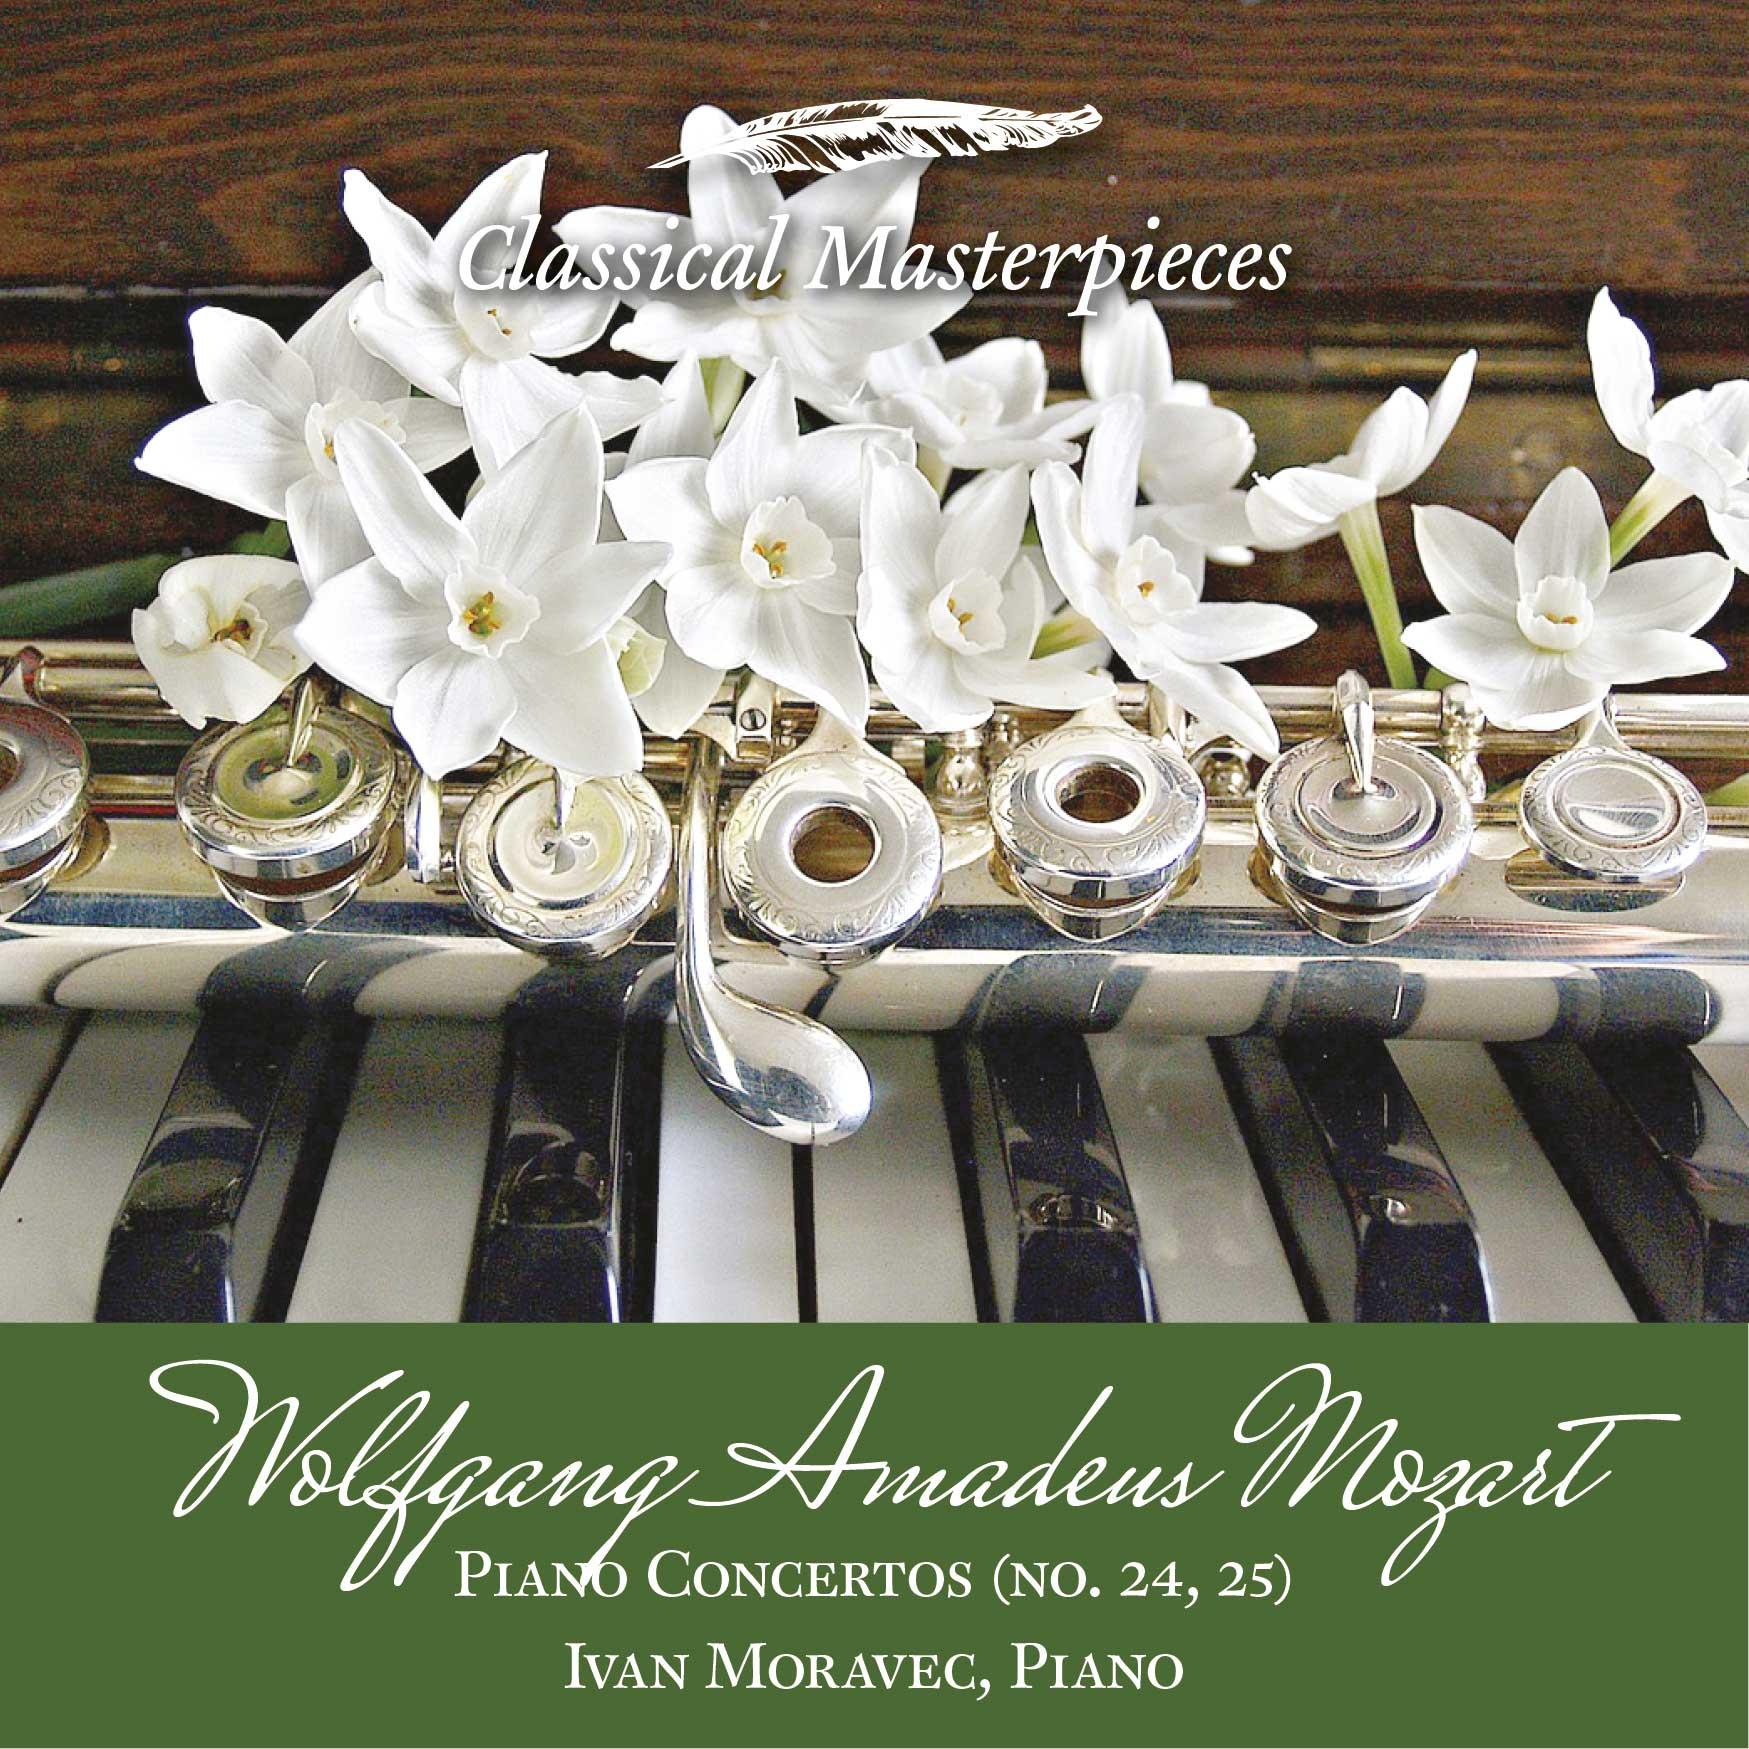 Wolfgang Amadeus Mozart Piano Concertos (no.24,25) Ivan Moravec, Piano